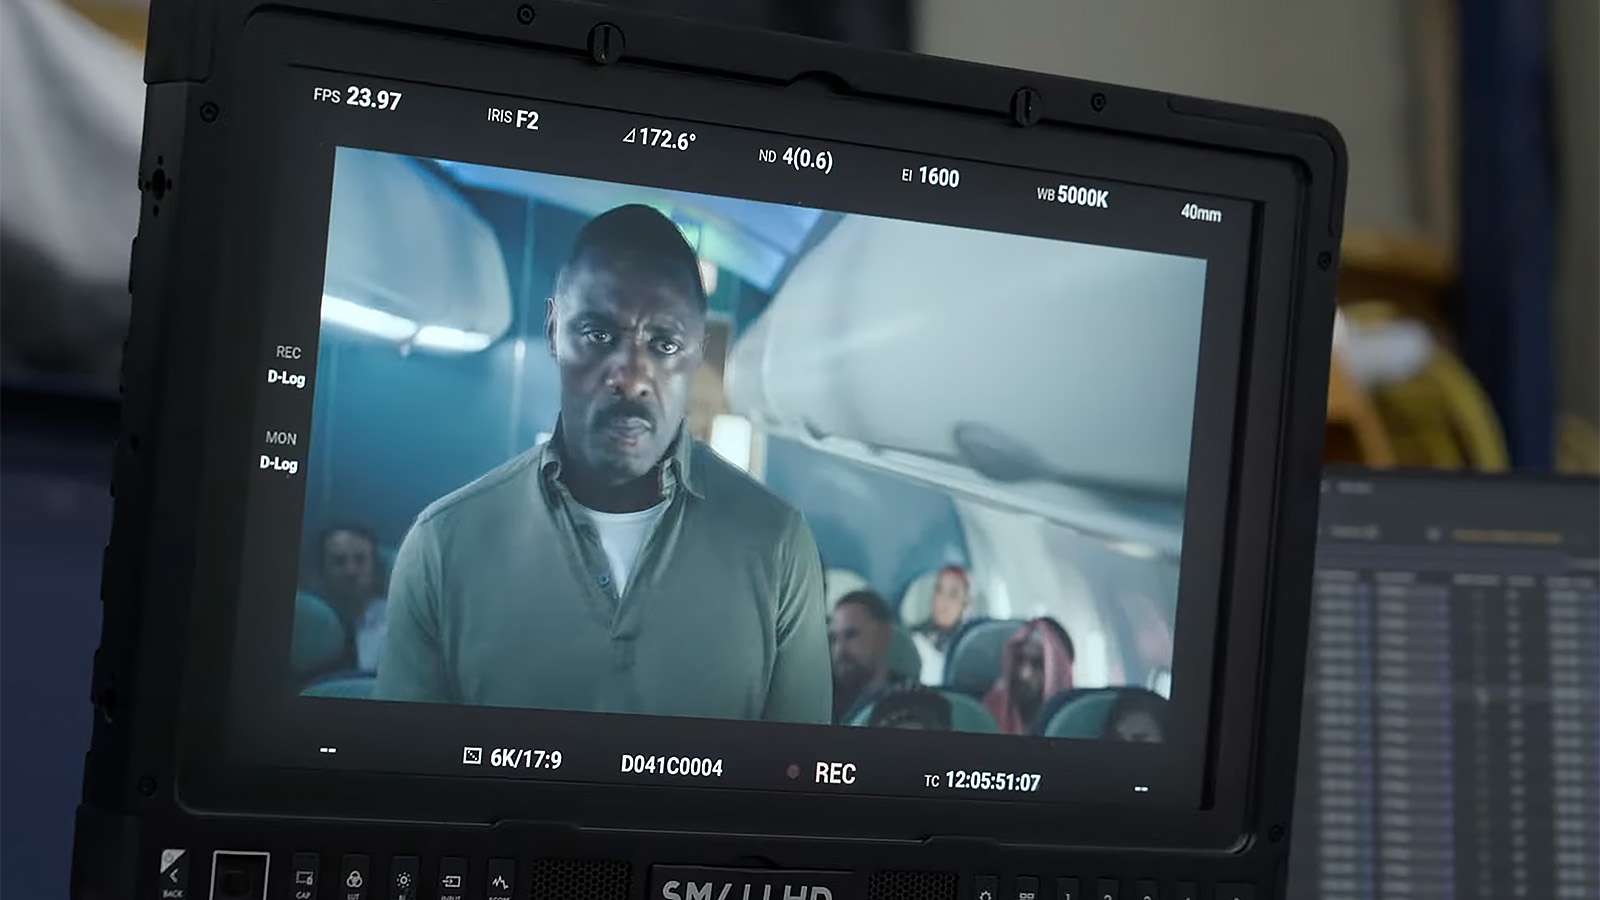 Did Idris Elba get shot in Hijack? Episode 3 explained